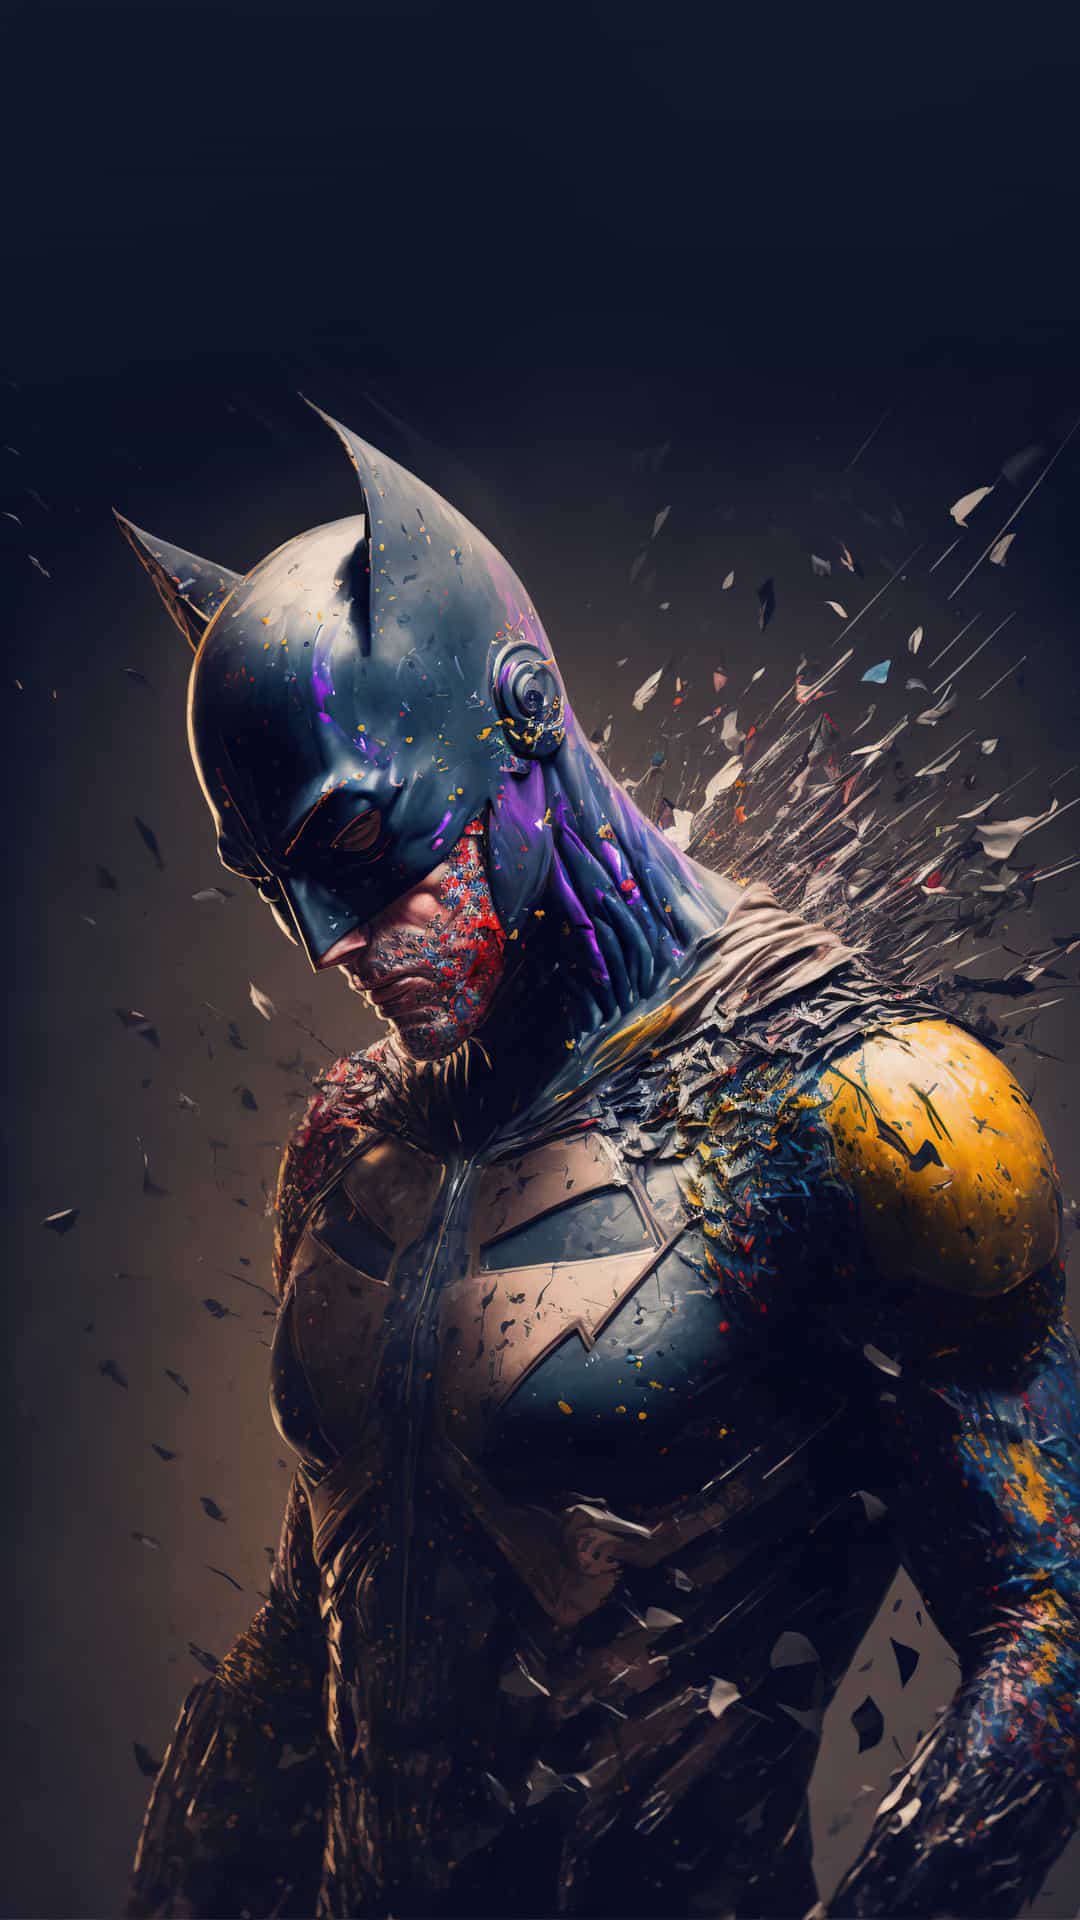 Fond decran HD pour iPhone de Batman vaincu